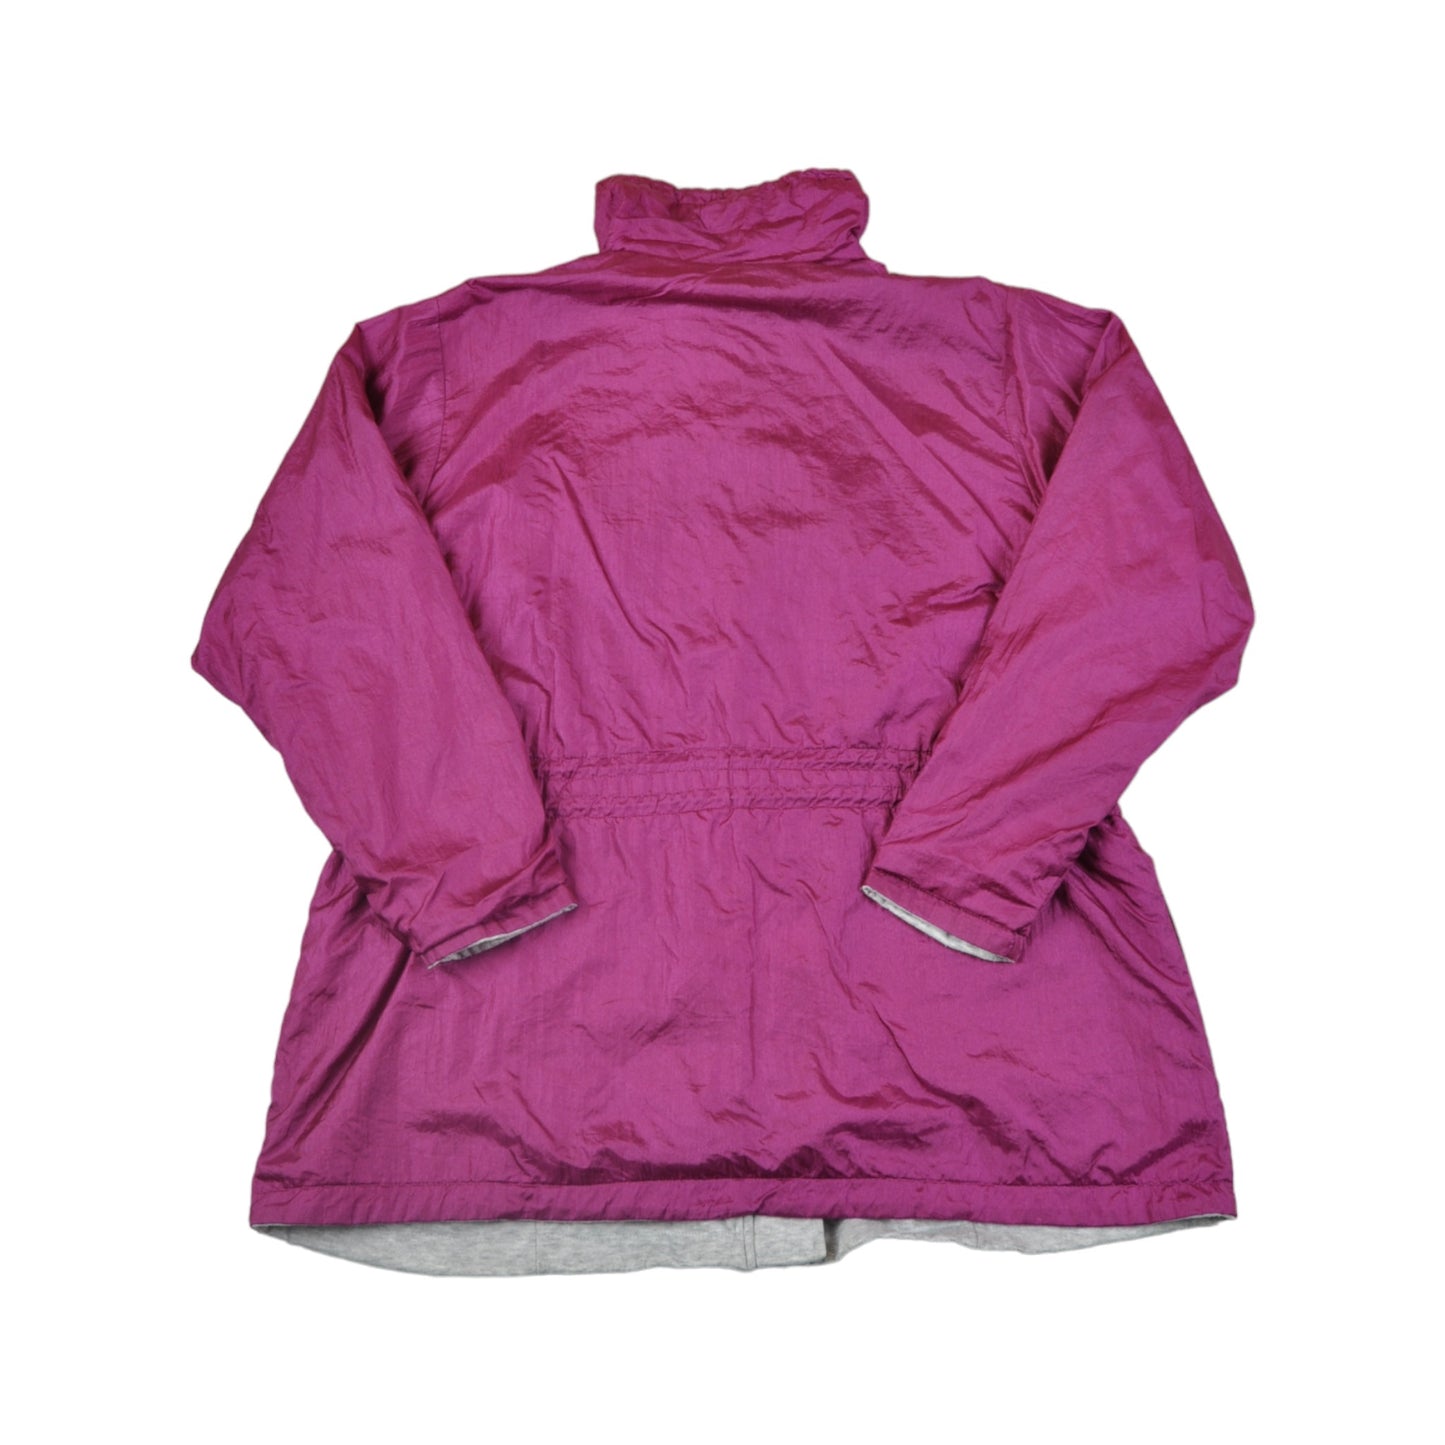 Vintage Reversible Ski Jacket Pink/Grey Ladies Large